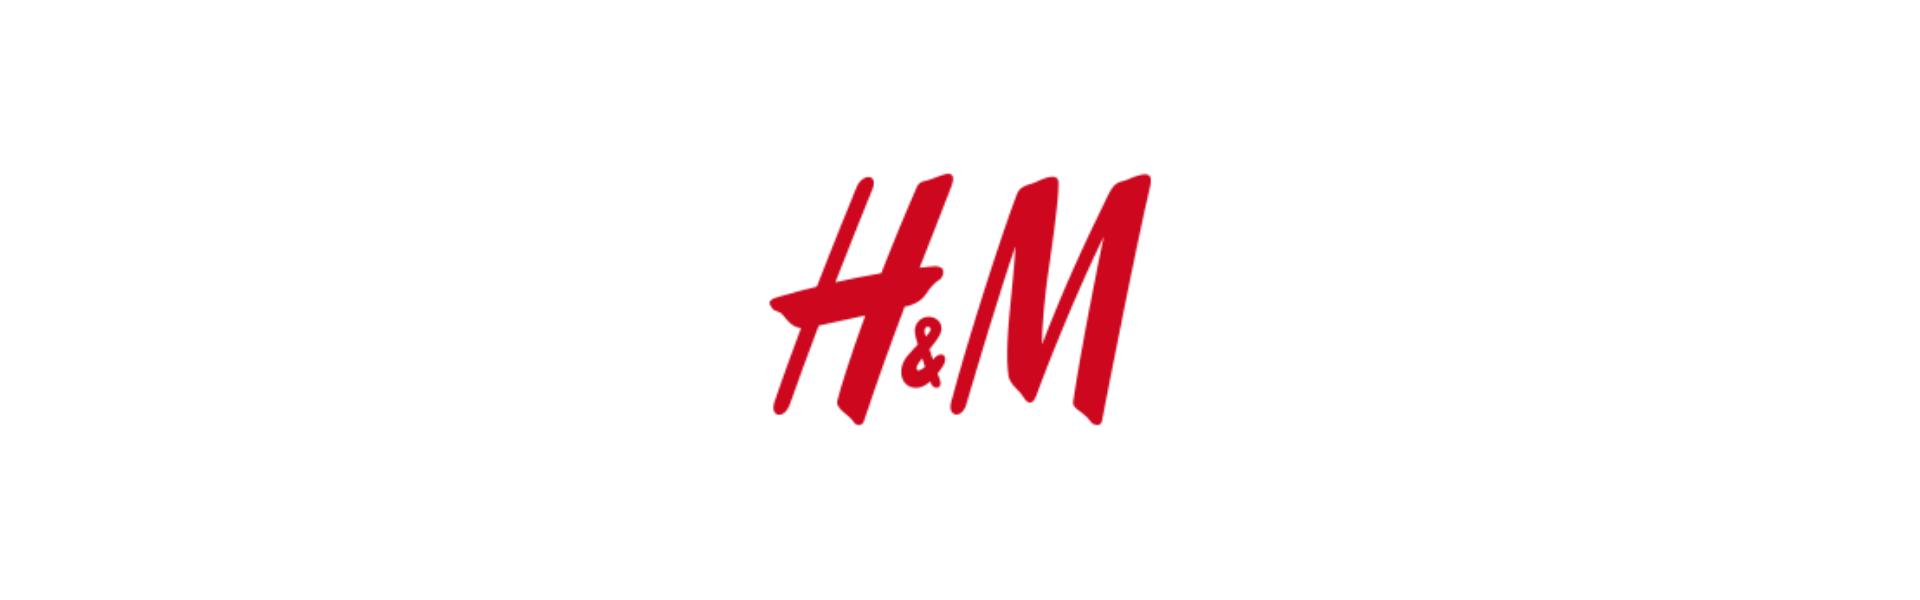 H M эмблема. Эйч энд эм логотип. Логотип магазина h and m. H&M картинки. 16 дем